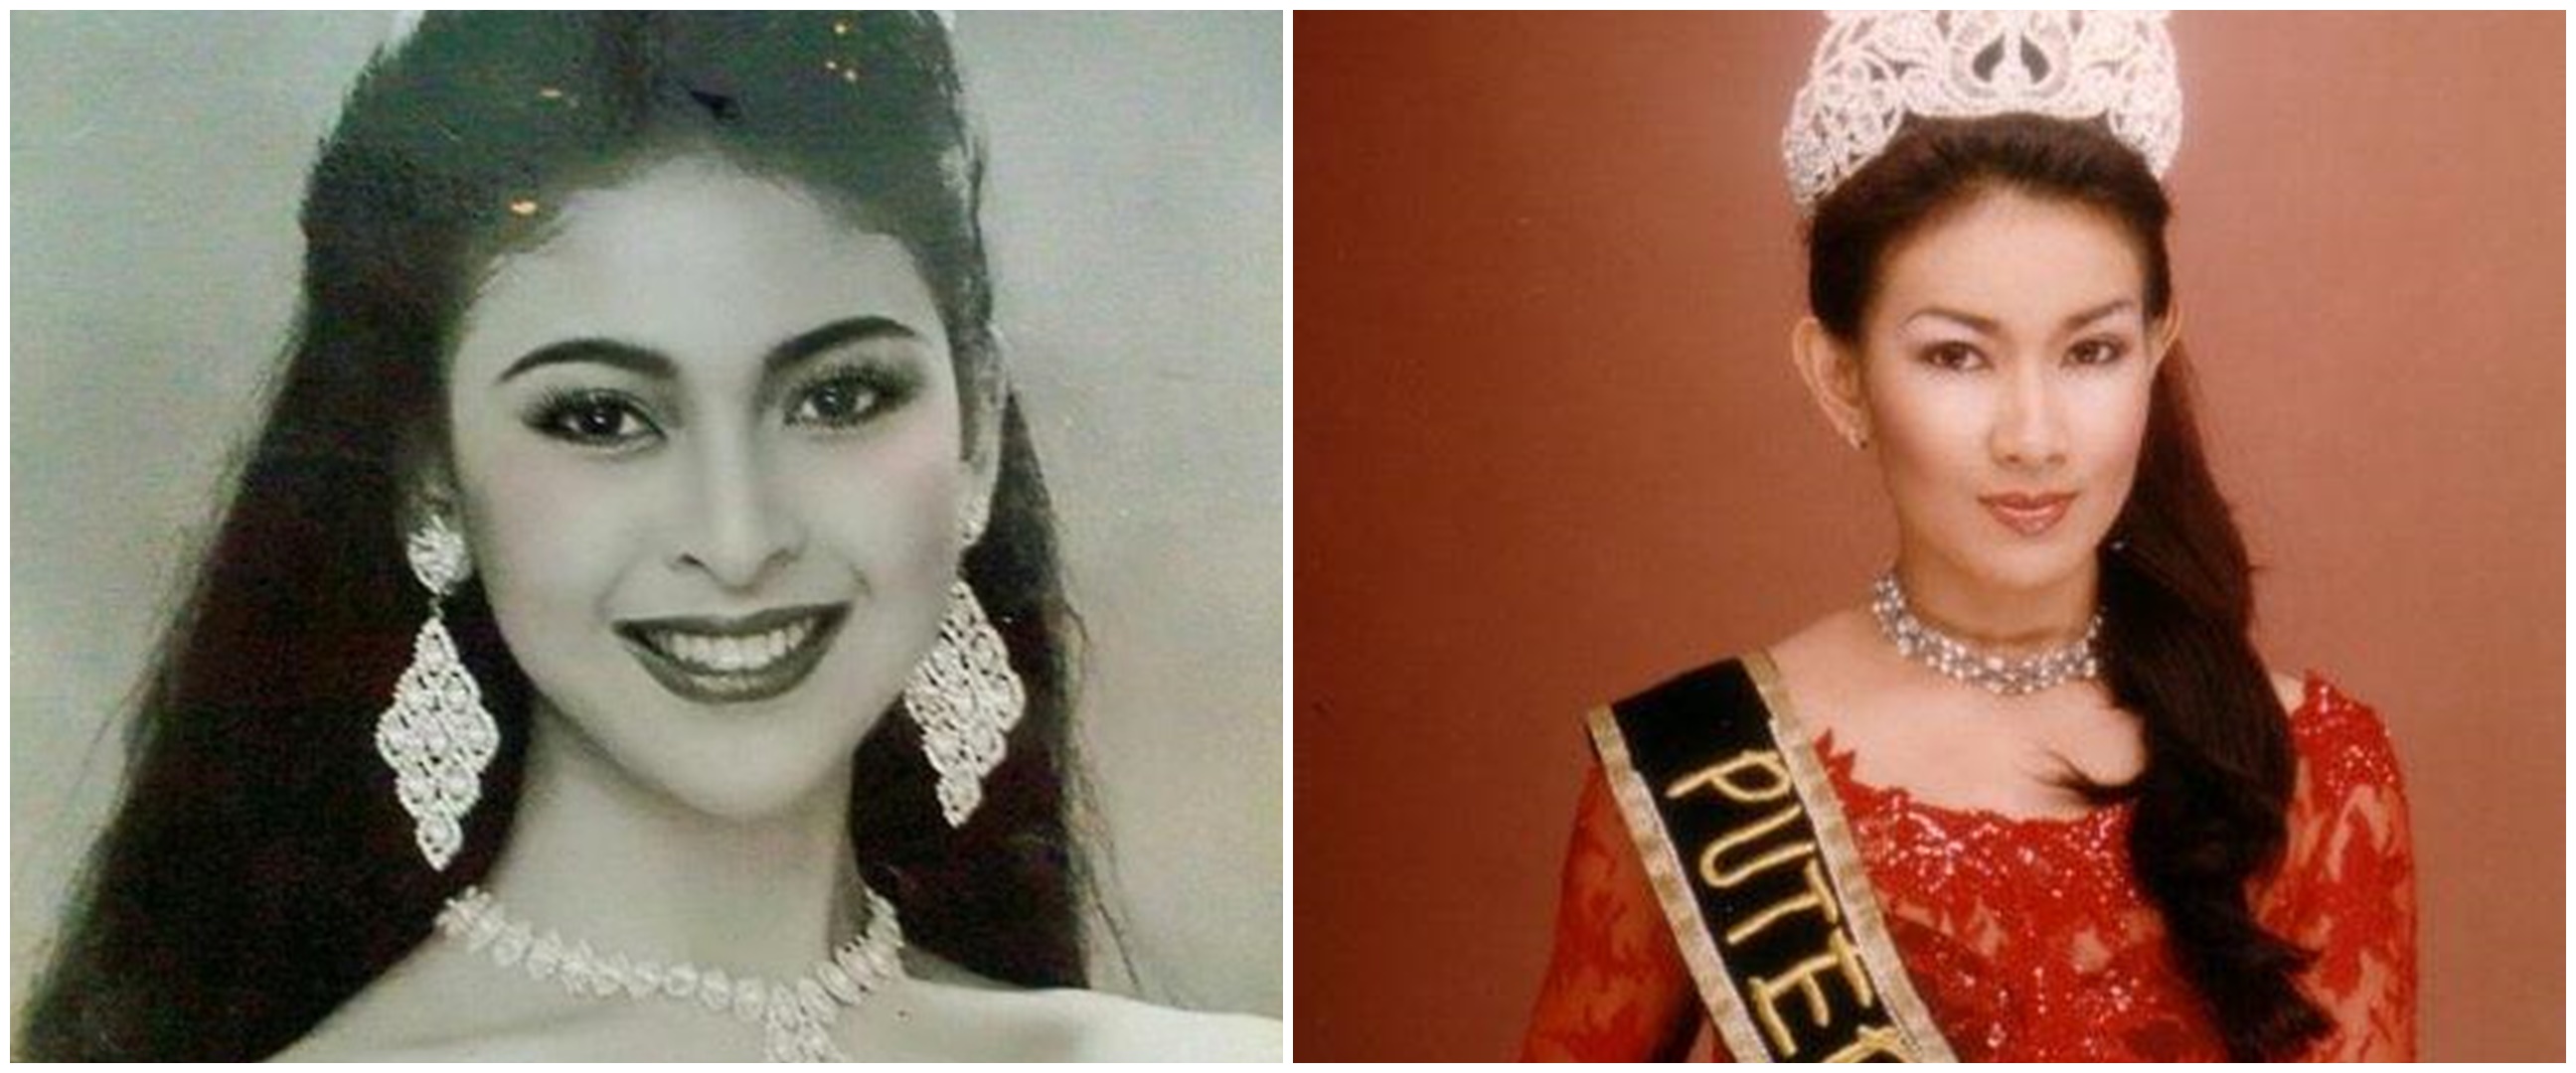 Foto dulu vs kini 4 Puteri Indonesia era 90-an, Indira Soediro bak ABG